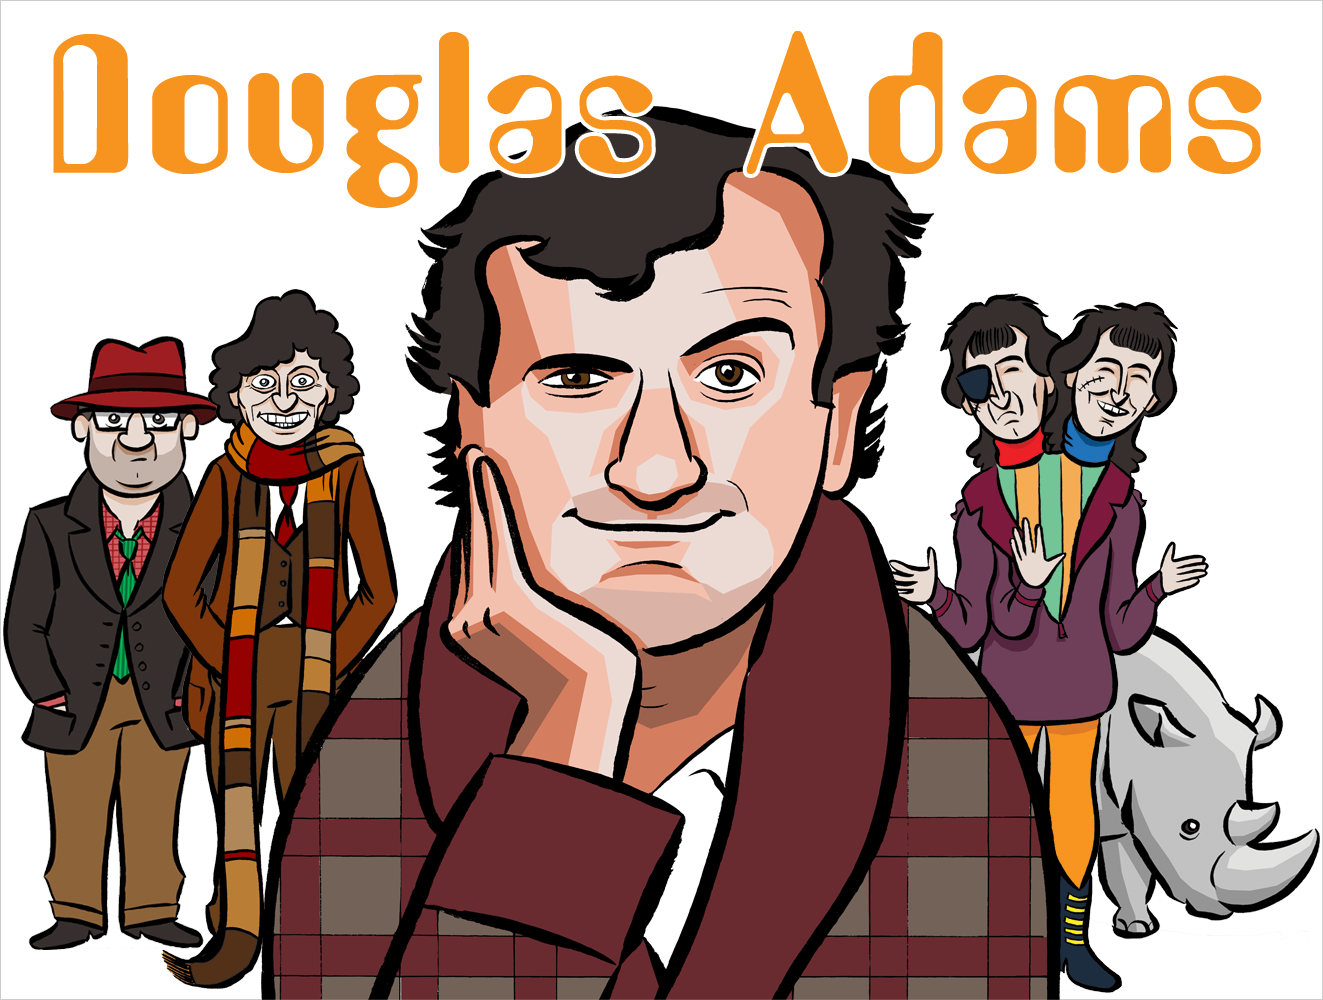 Douglas Adams poster art by Andrew Waugh